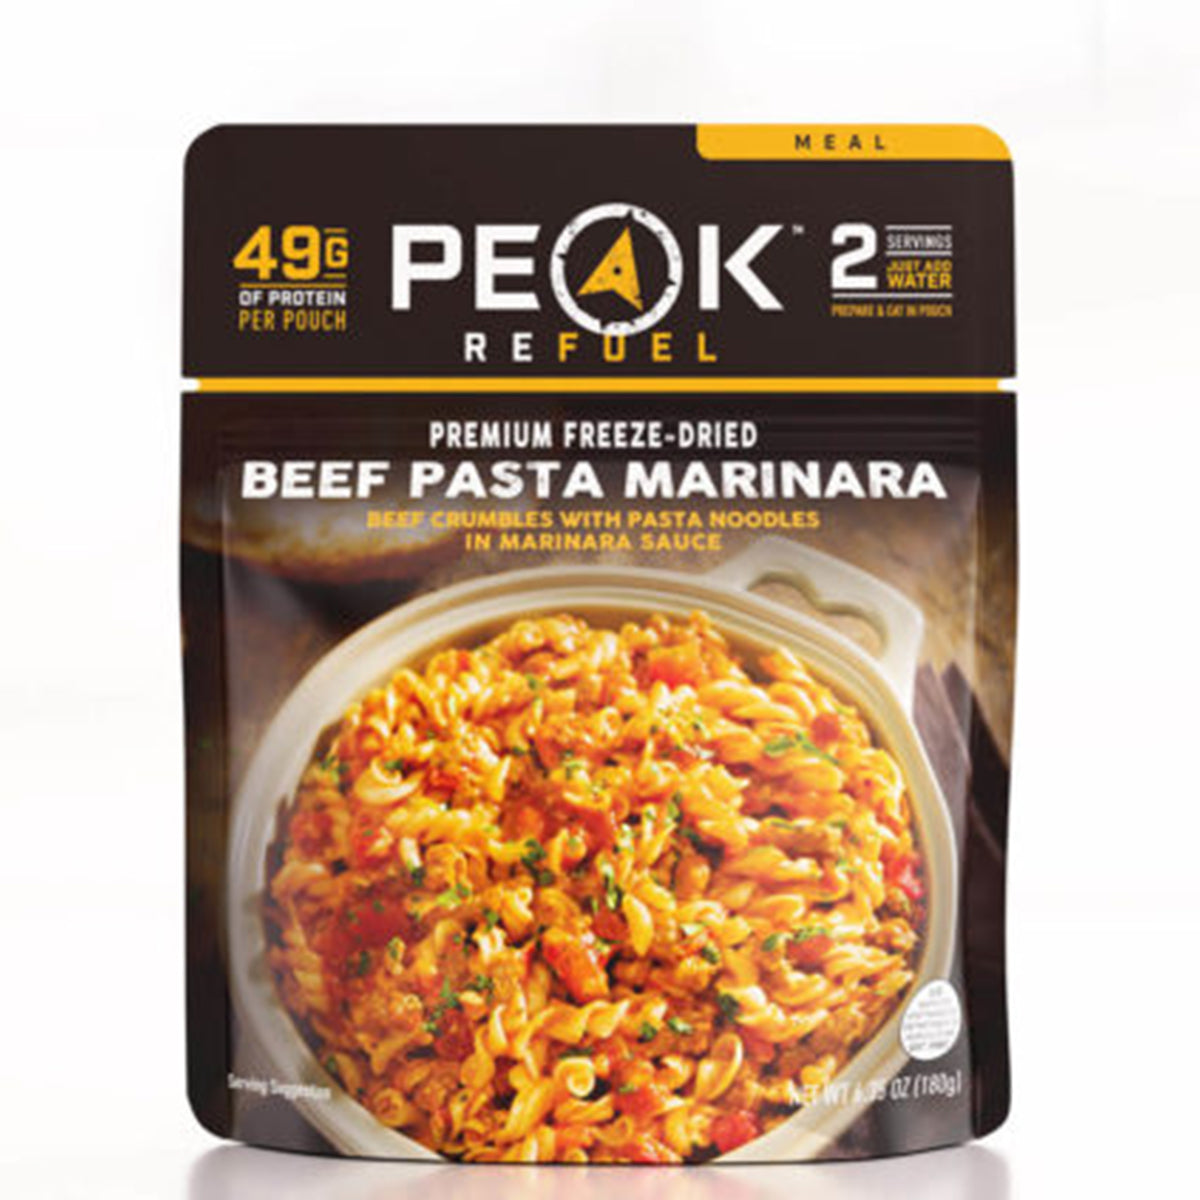 Peak Refuel Beef Pasta Marinara by Peak Refuel | Camping - goHUNT Shop